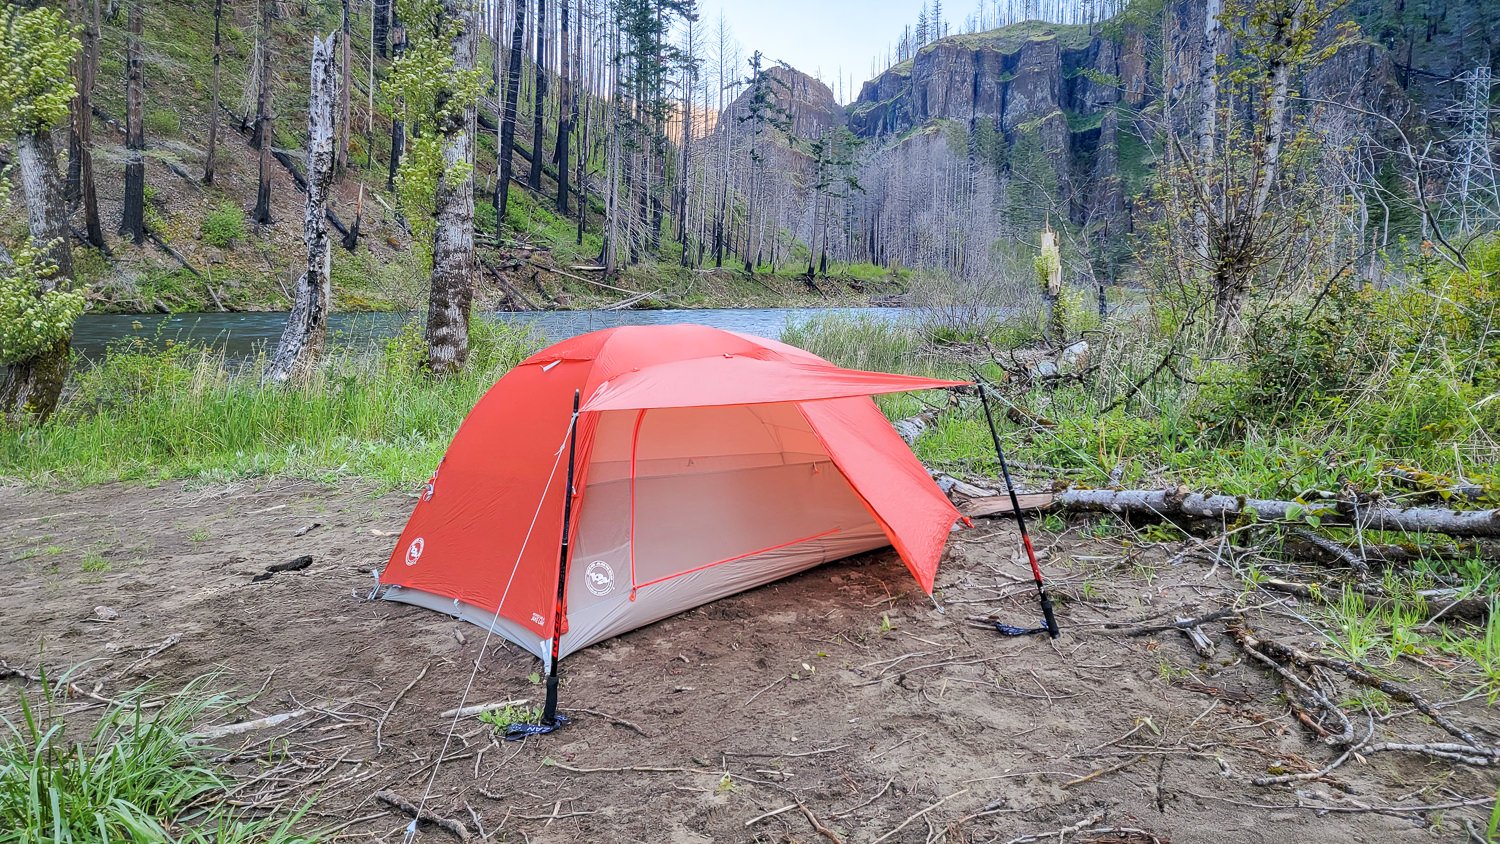 The Big Agnes Copper Spur HV UL2 tent